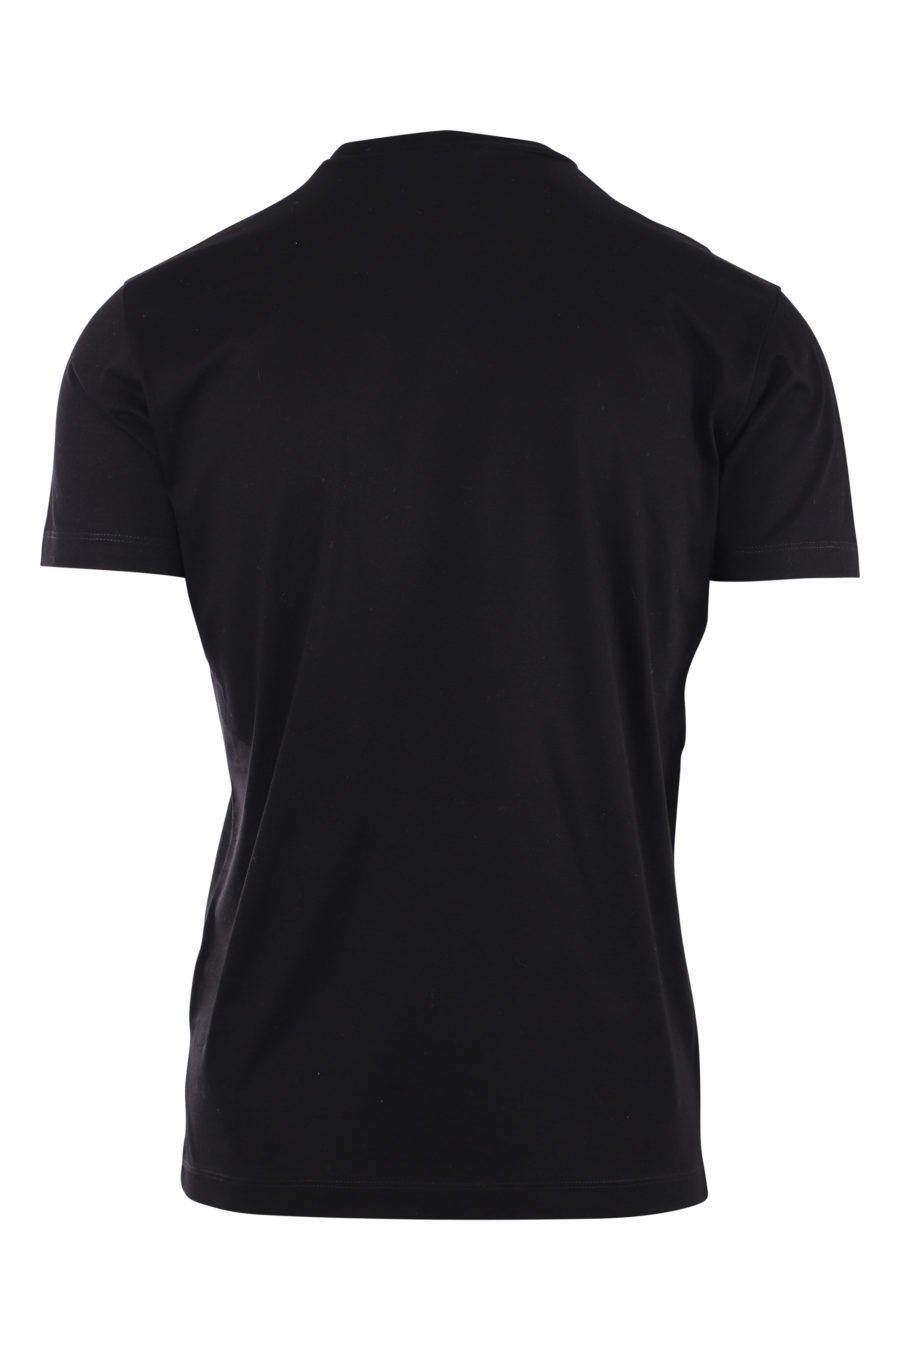 Black T-shirt with "globetrotter" planet logo - IMG 9722